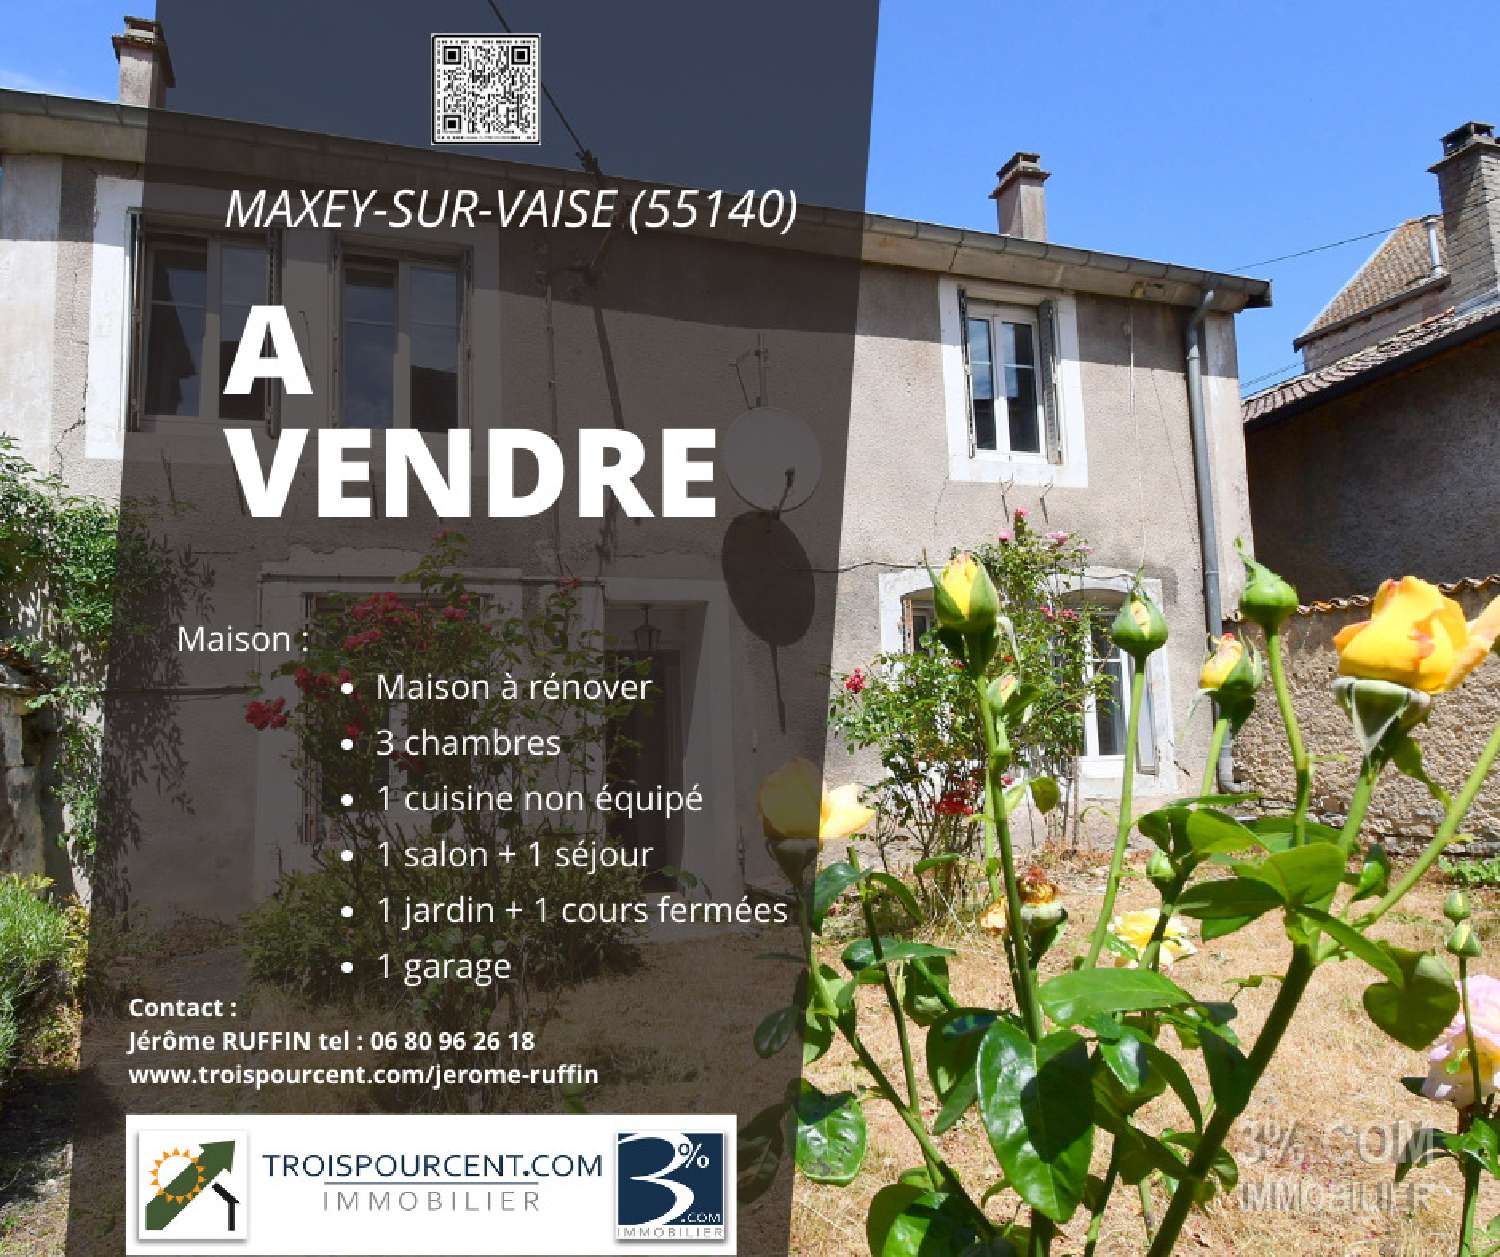 Maxey-sur-Vaise Meuse dorpshuis foto 6827254